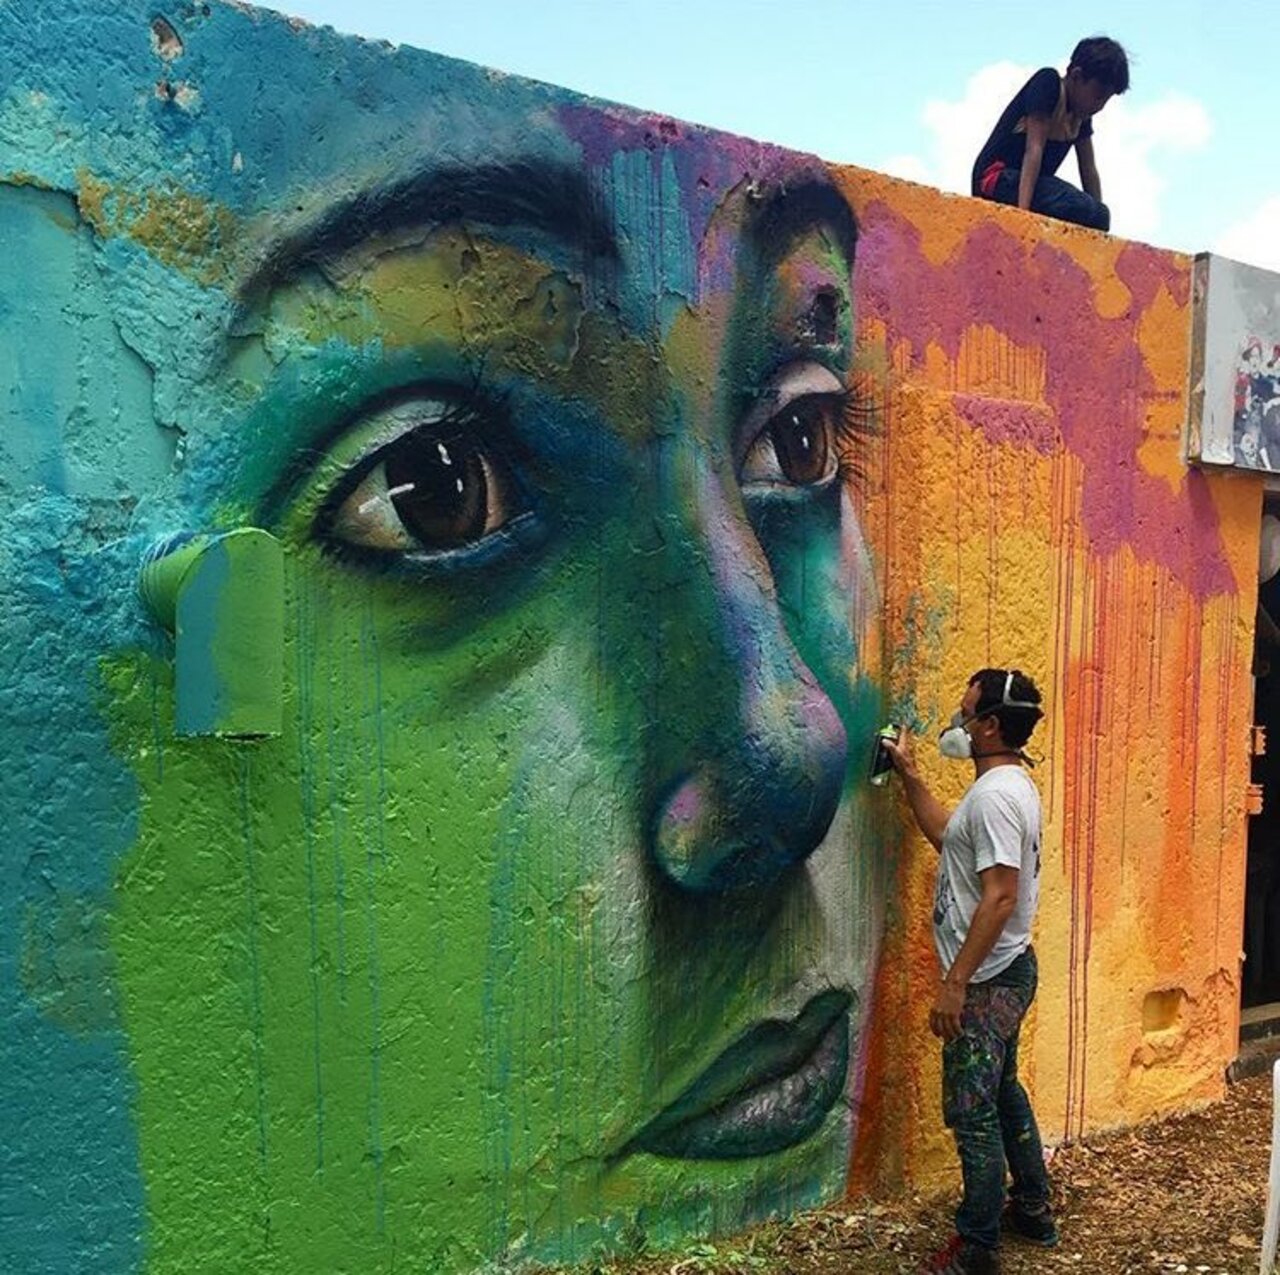 New Street Art • Joel Artista in Israel #art #mural #graffiti #streetart https://t.co/hCsLHfNLKC